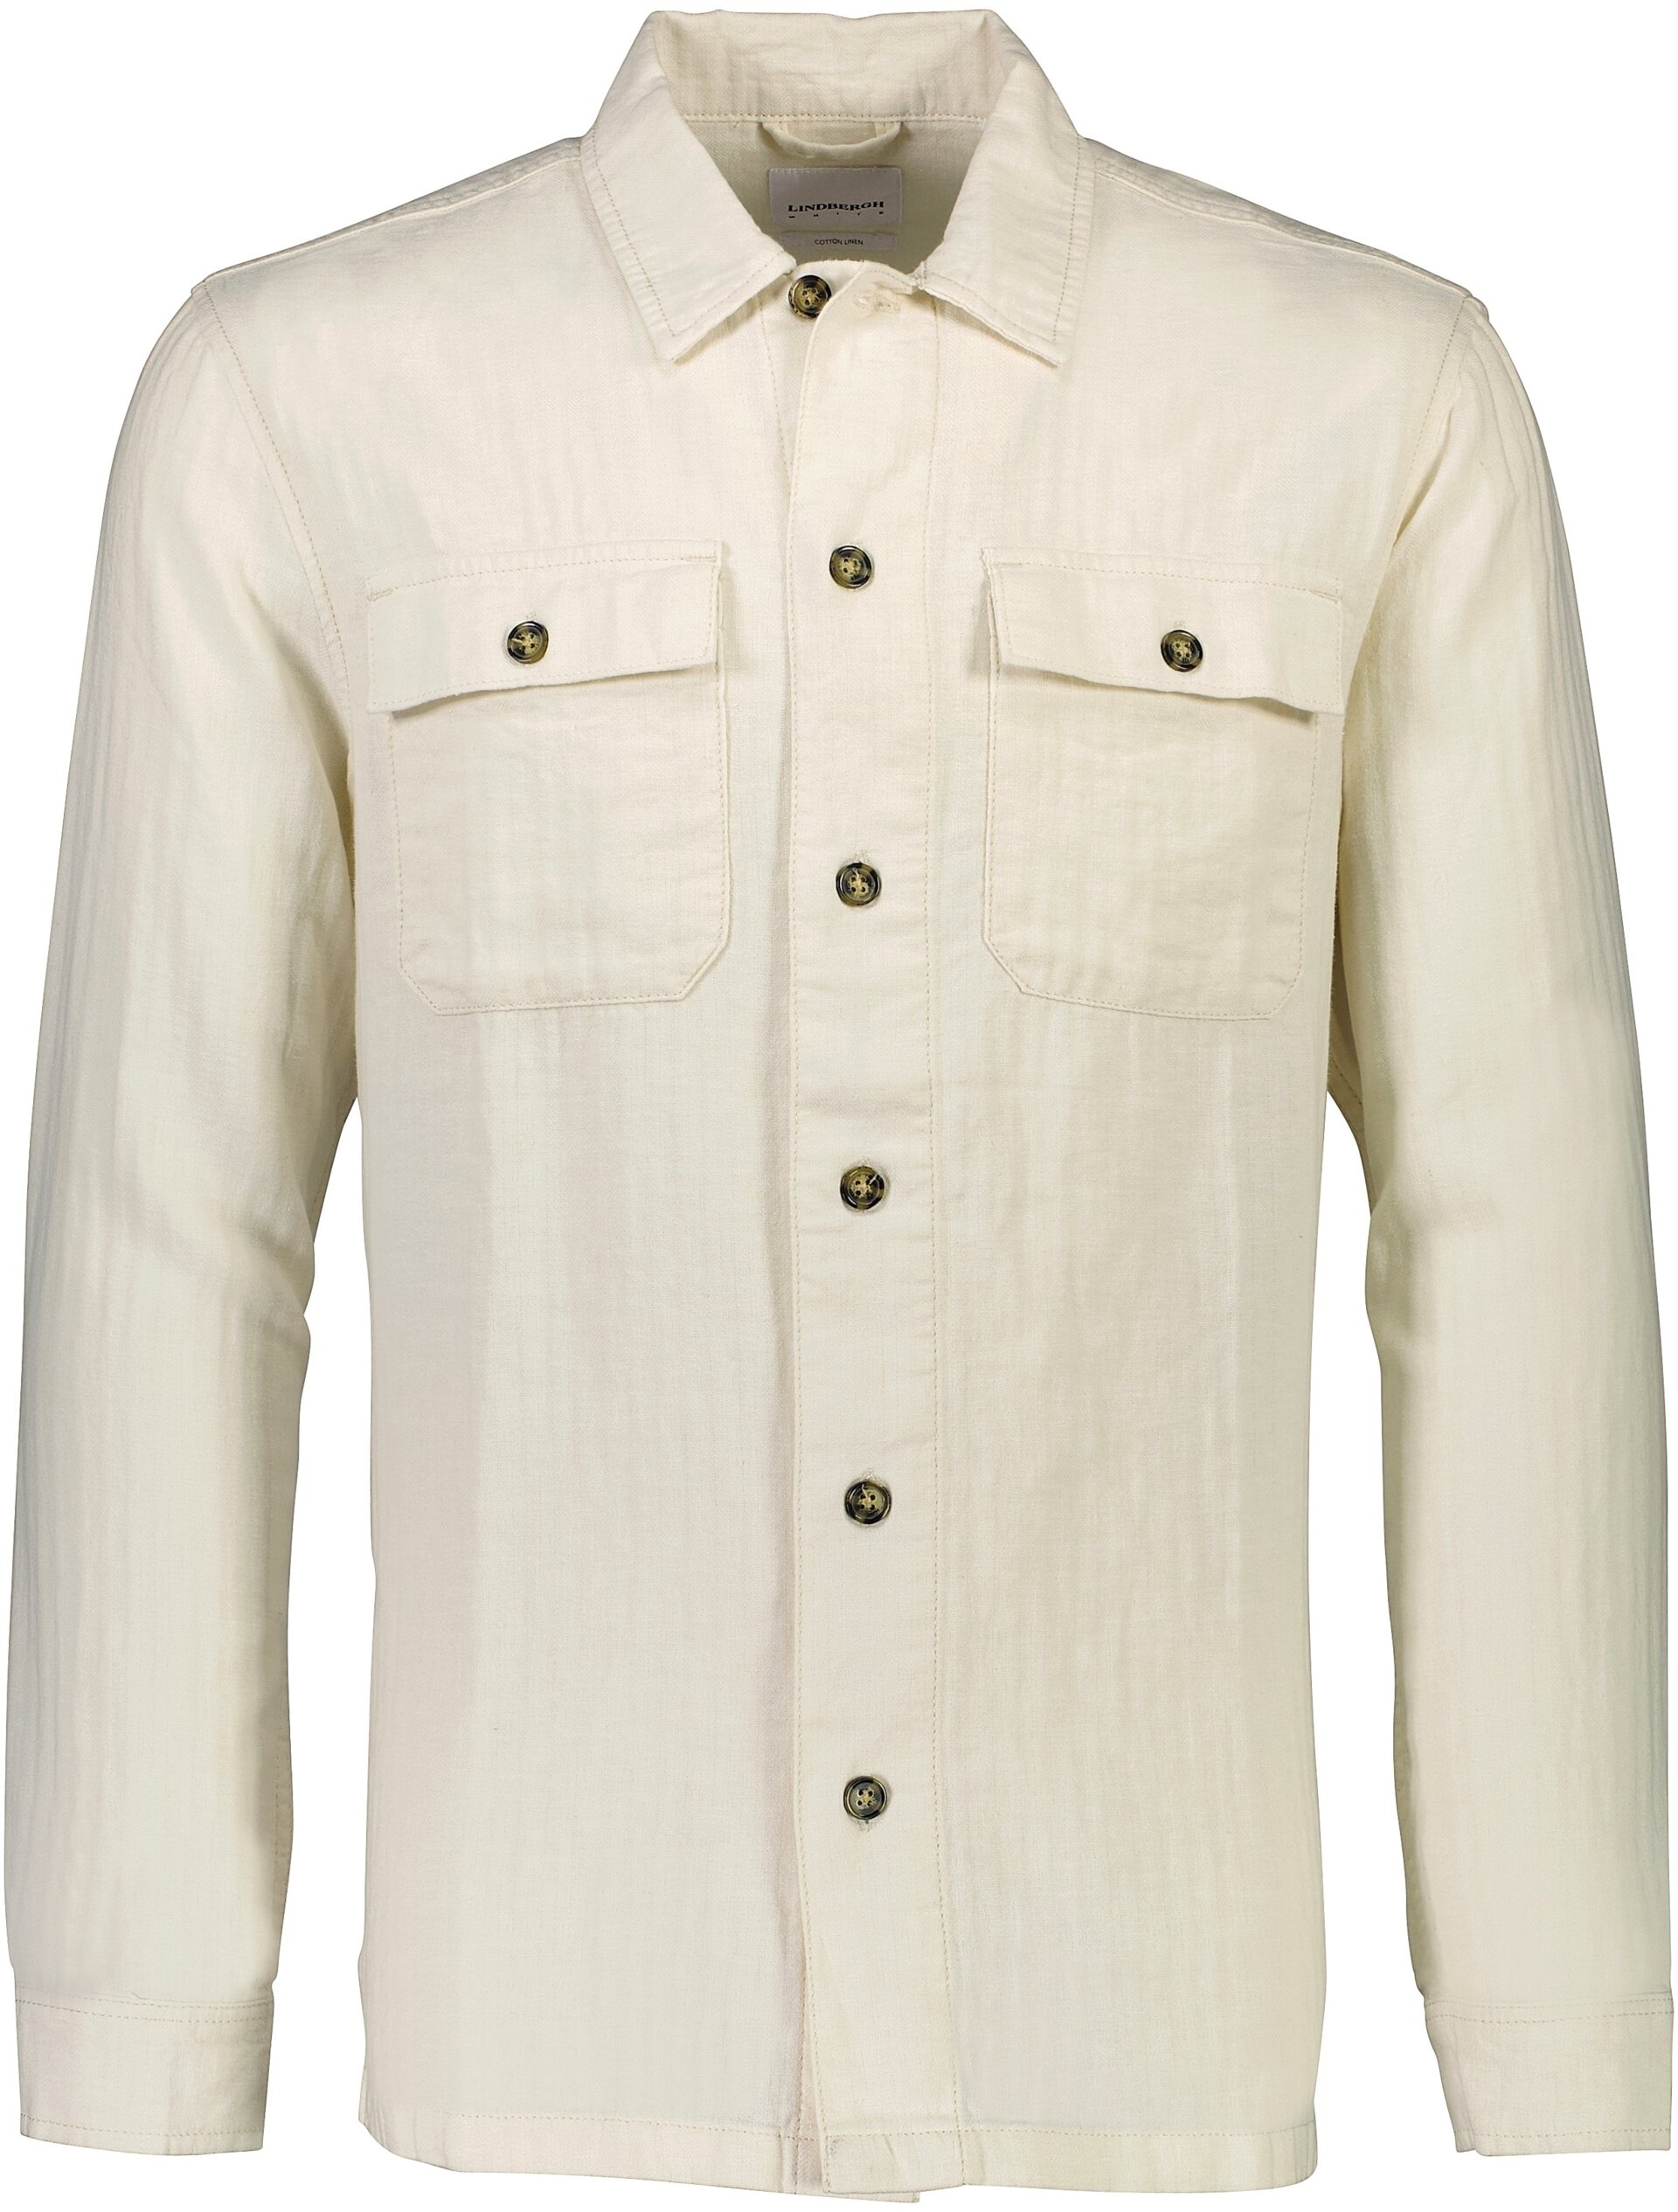 Lindbergh Linen shirt white / optical white